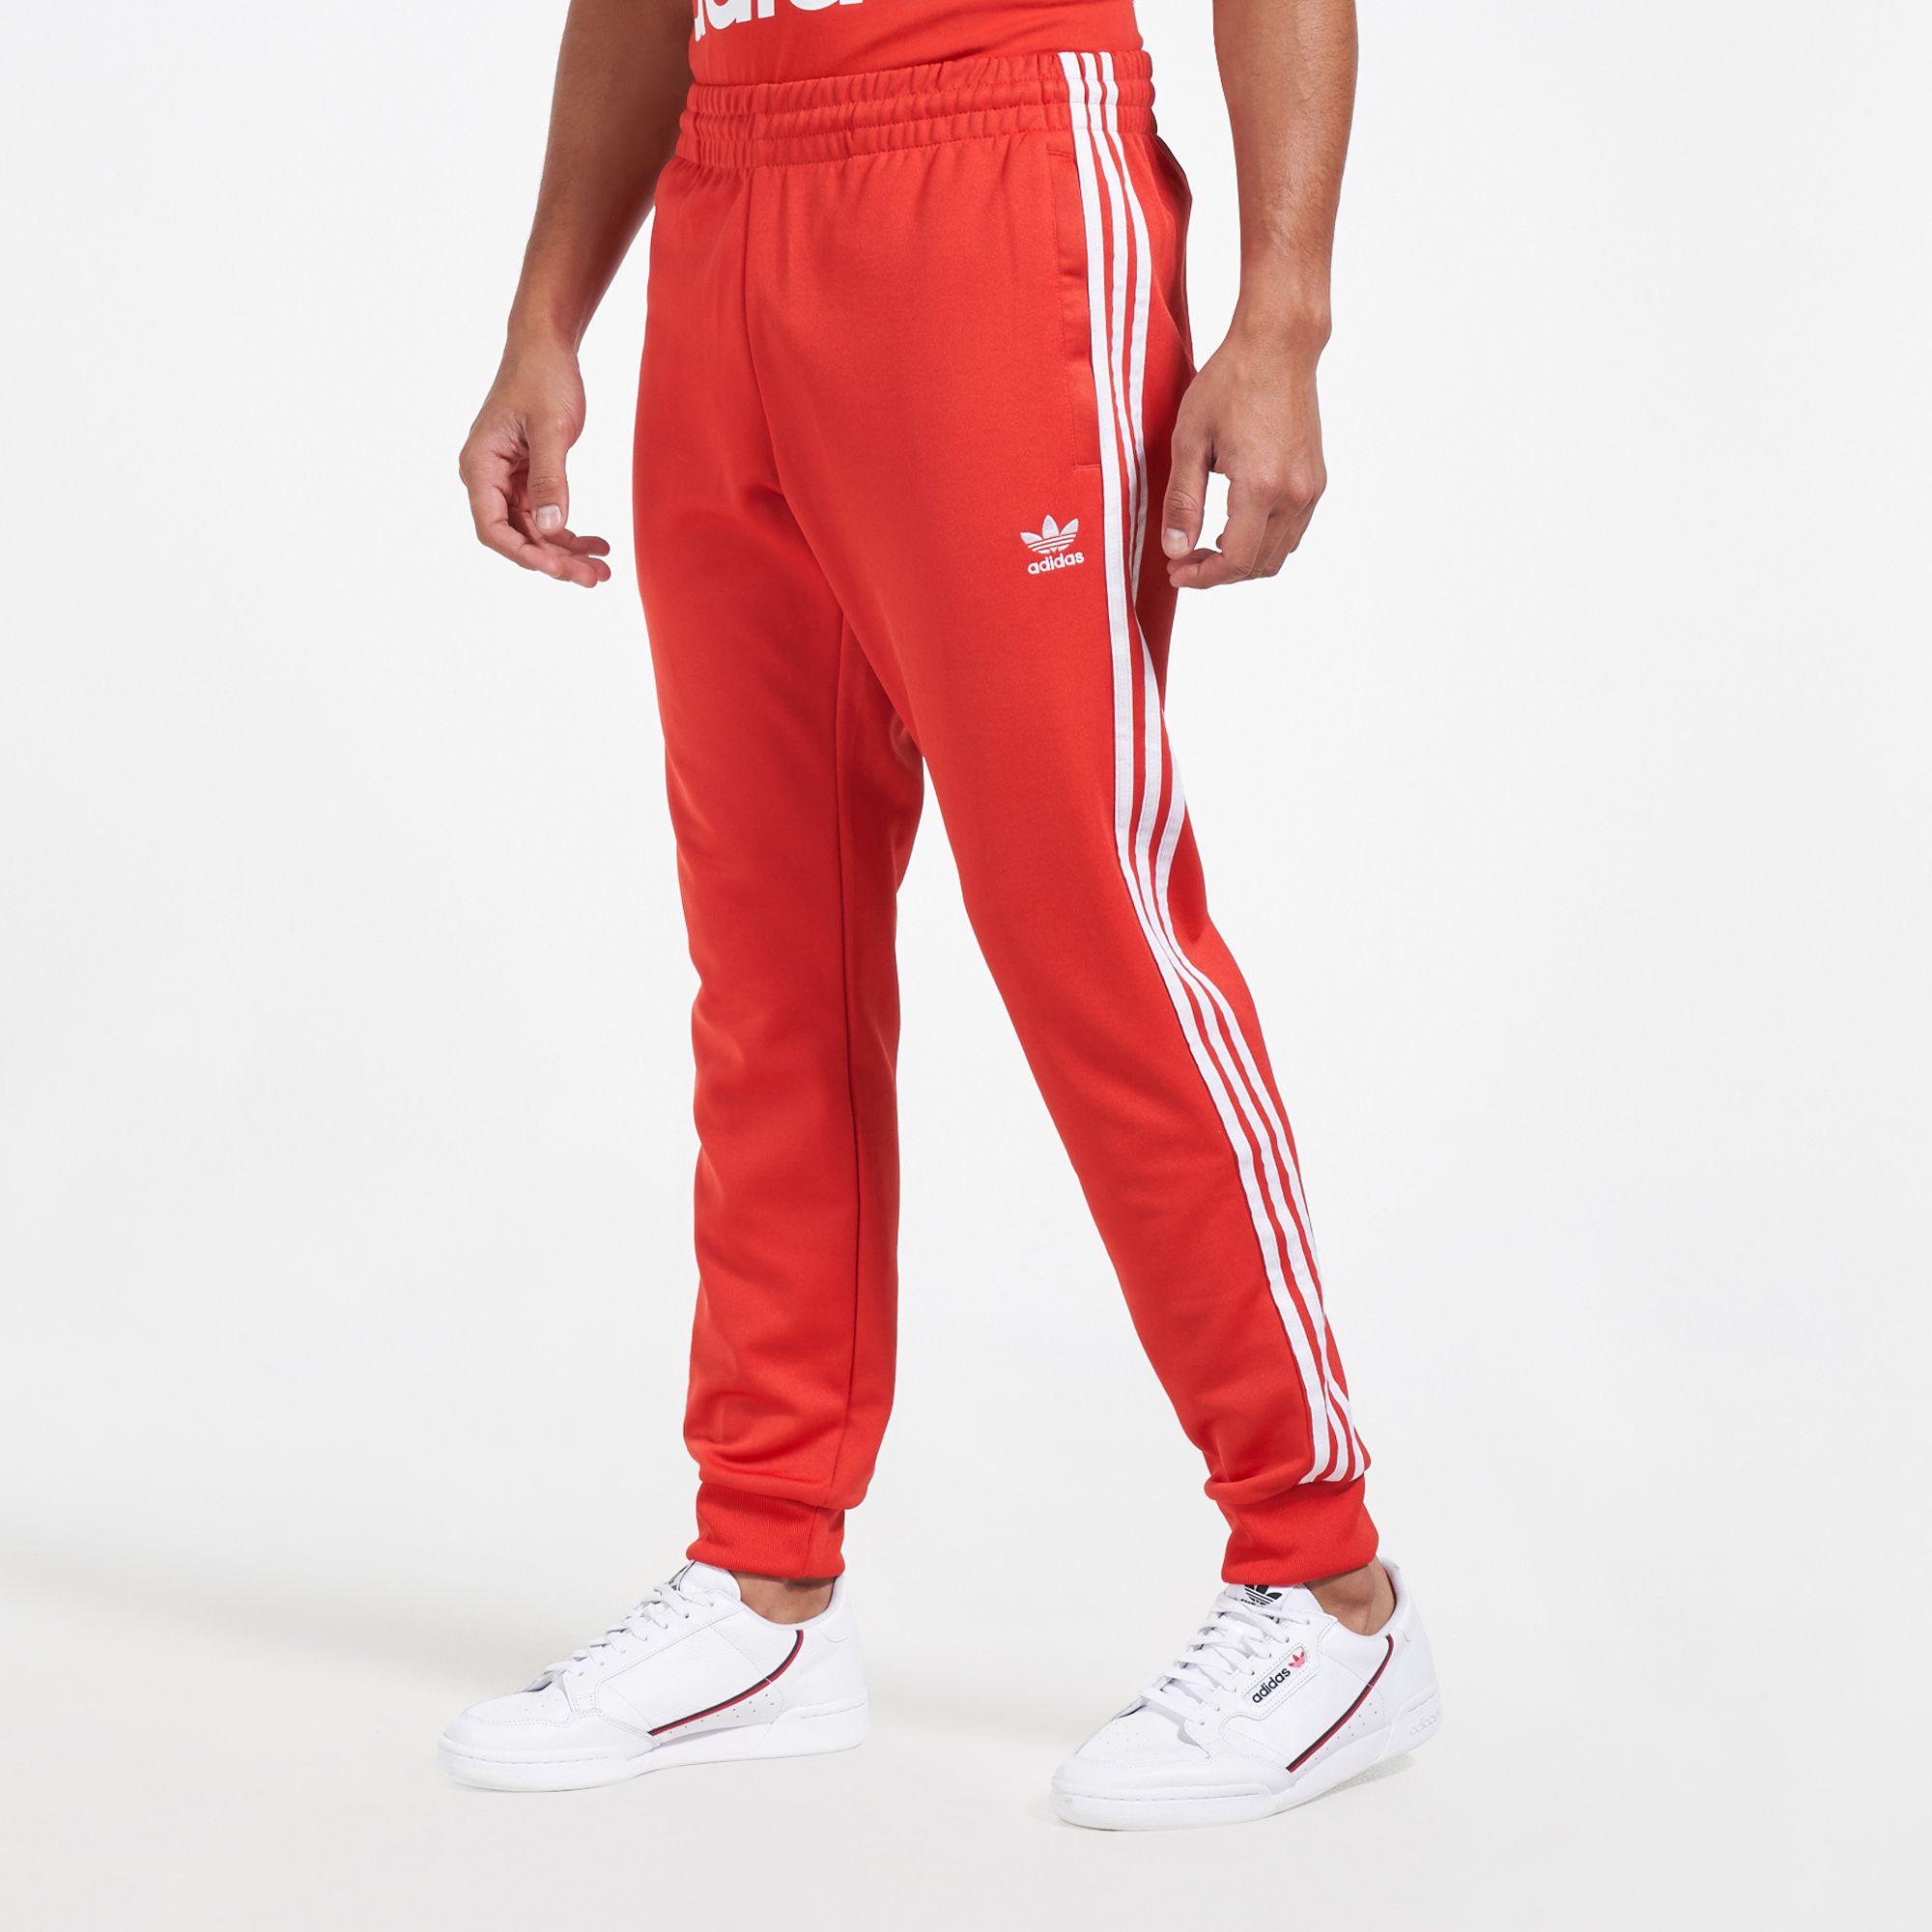 adidas mens red track pants